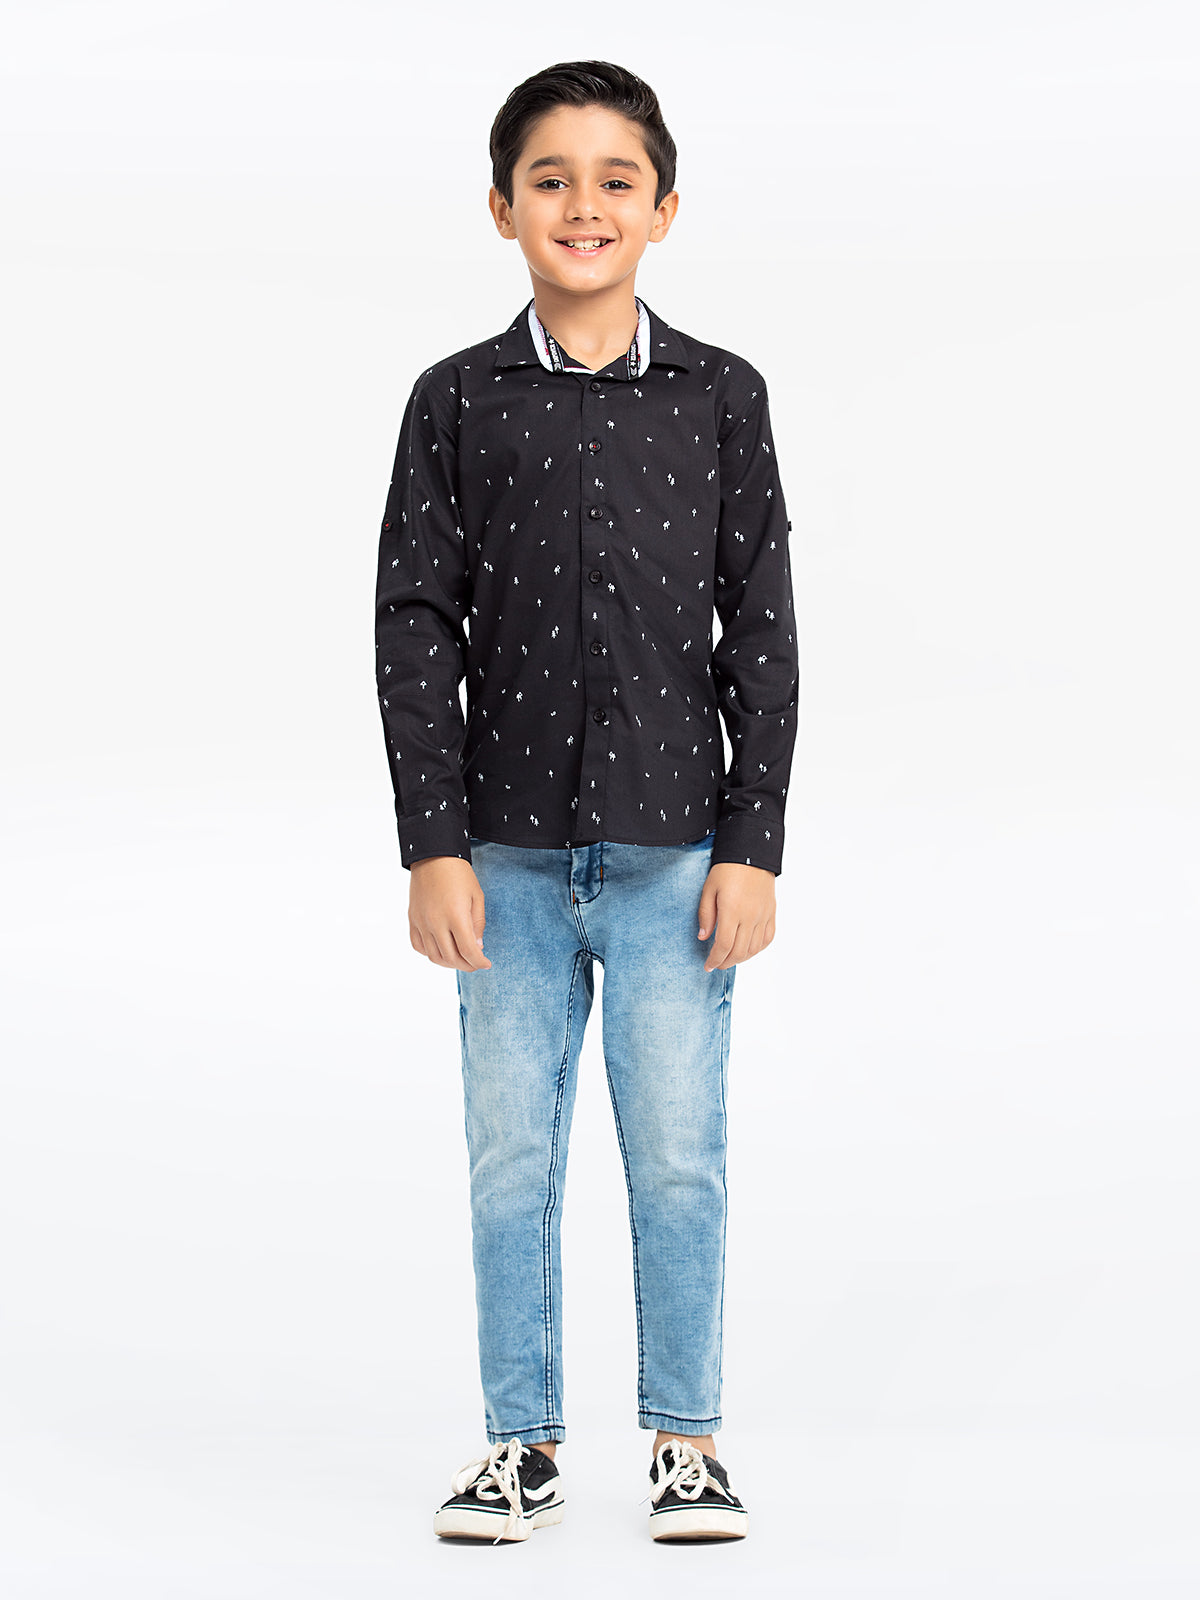 Boy's Black Shirt - EBTS23-27499